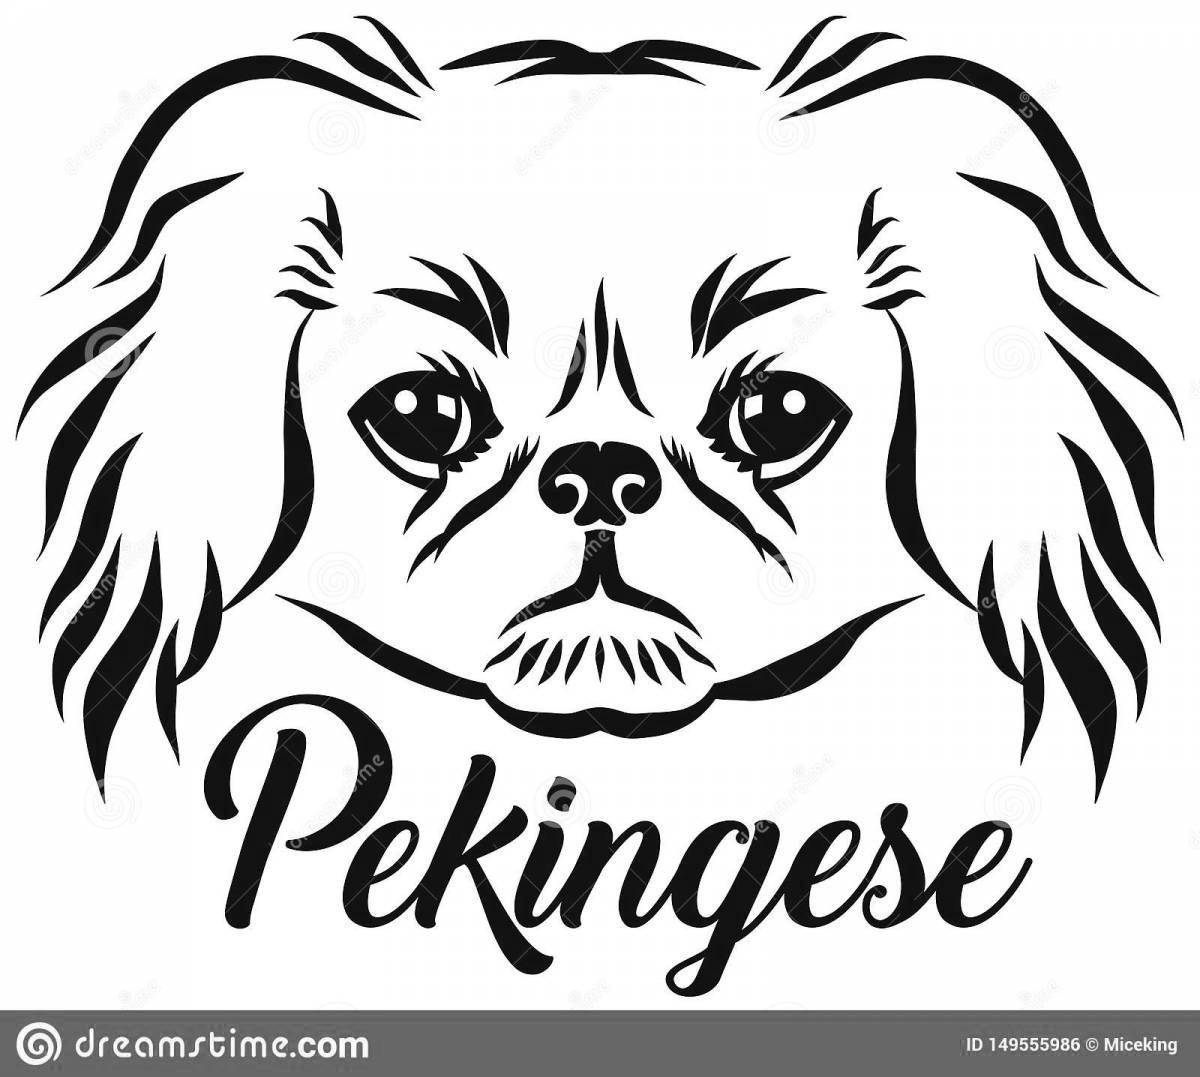 Pekingese#1